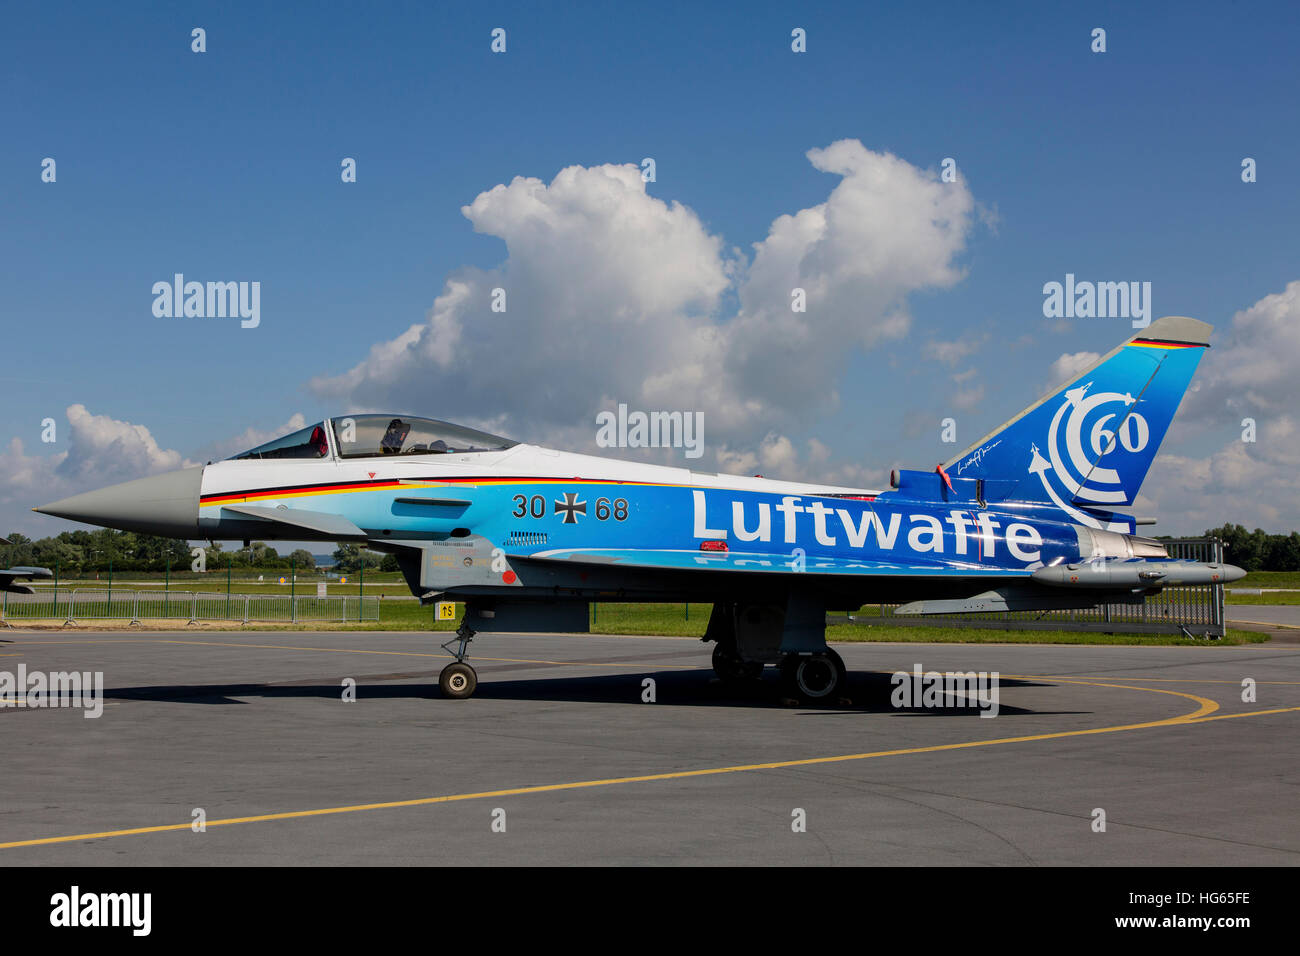 German Air Force Typhoon fighter plane in Luftwaffe markings. Stock Photo